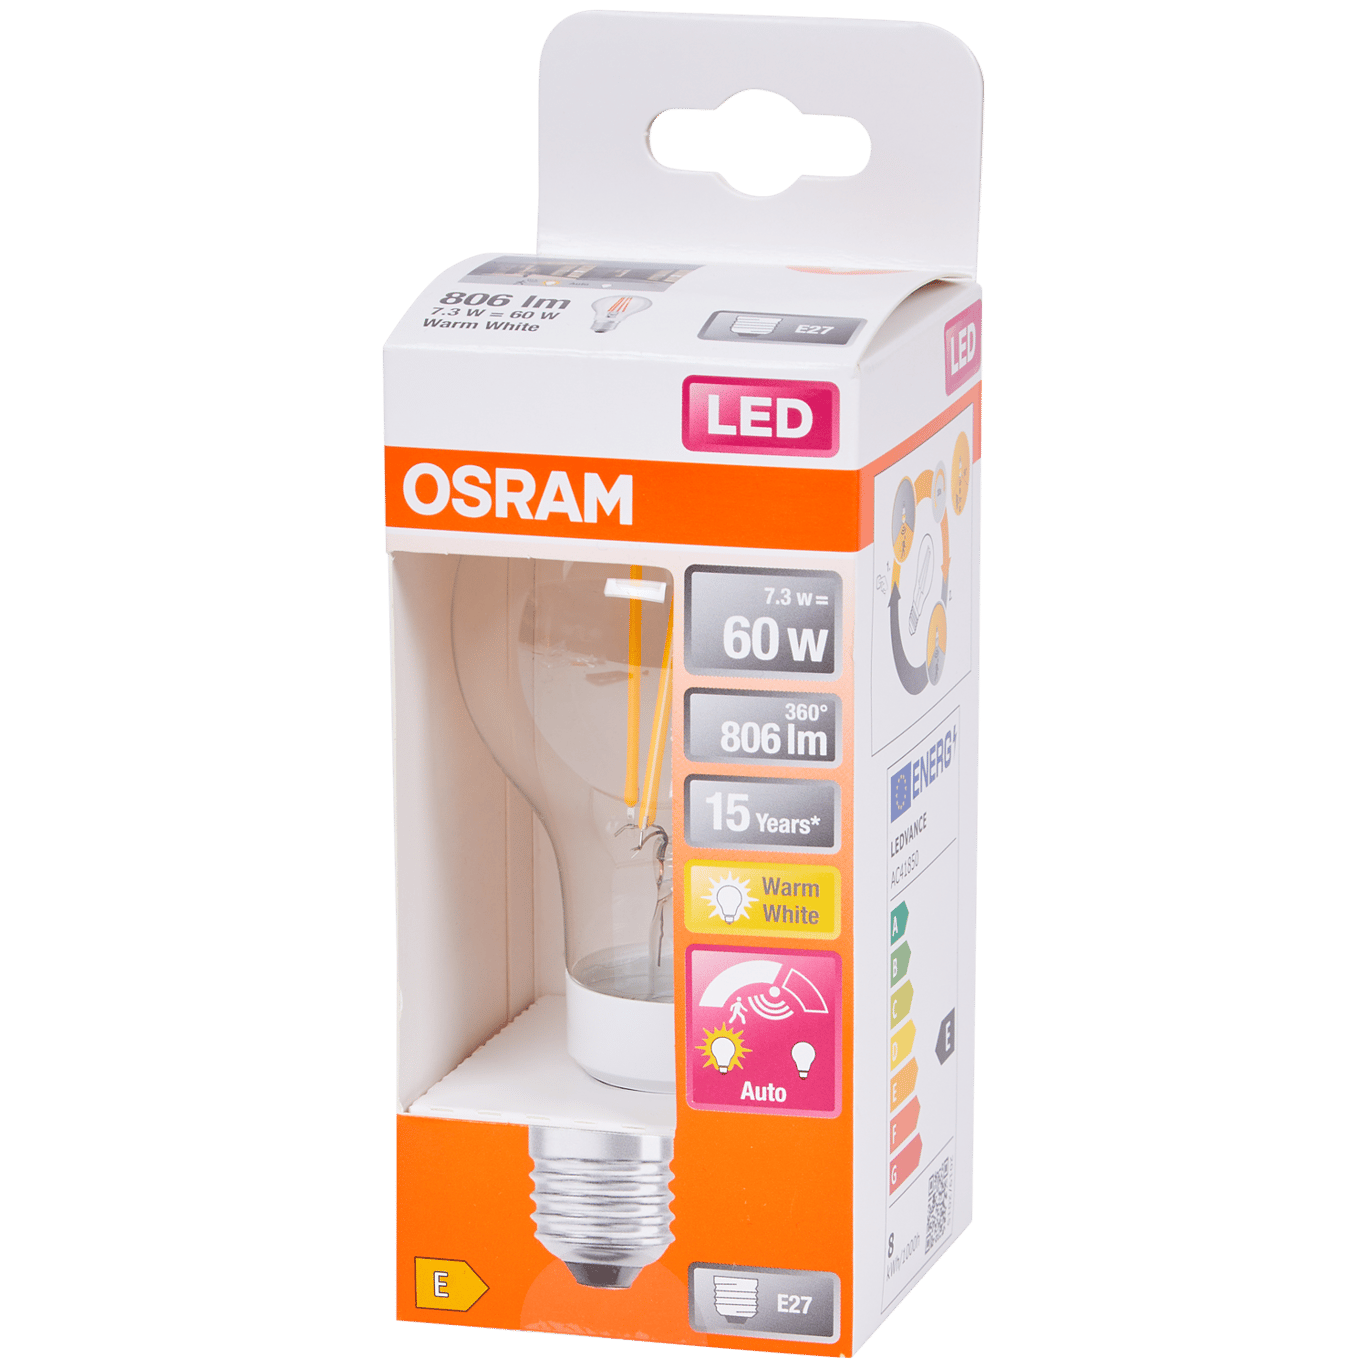 Osram Led-Lampe mit Bewegungssensor